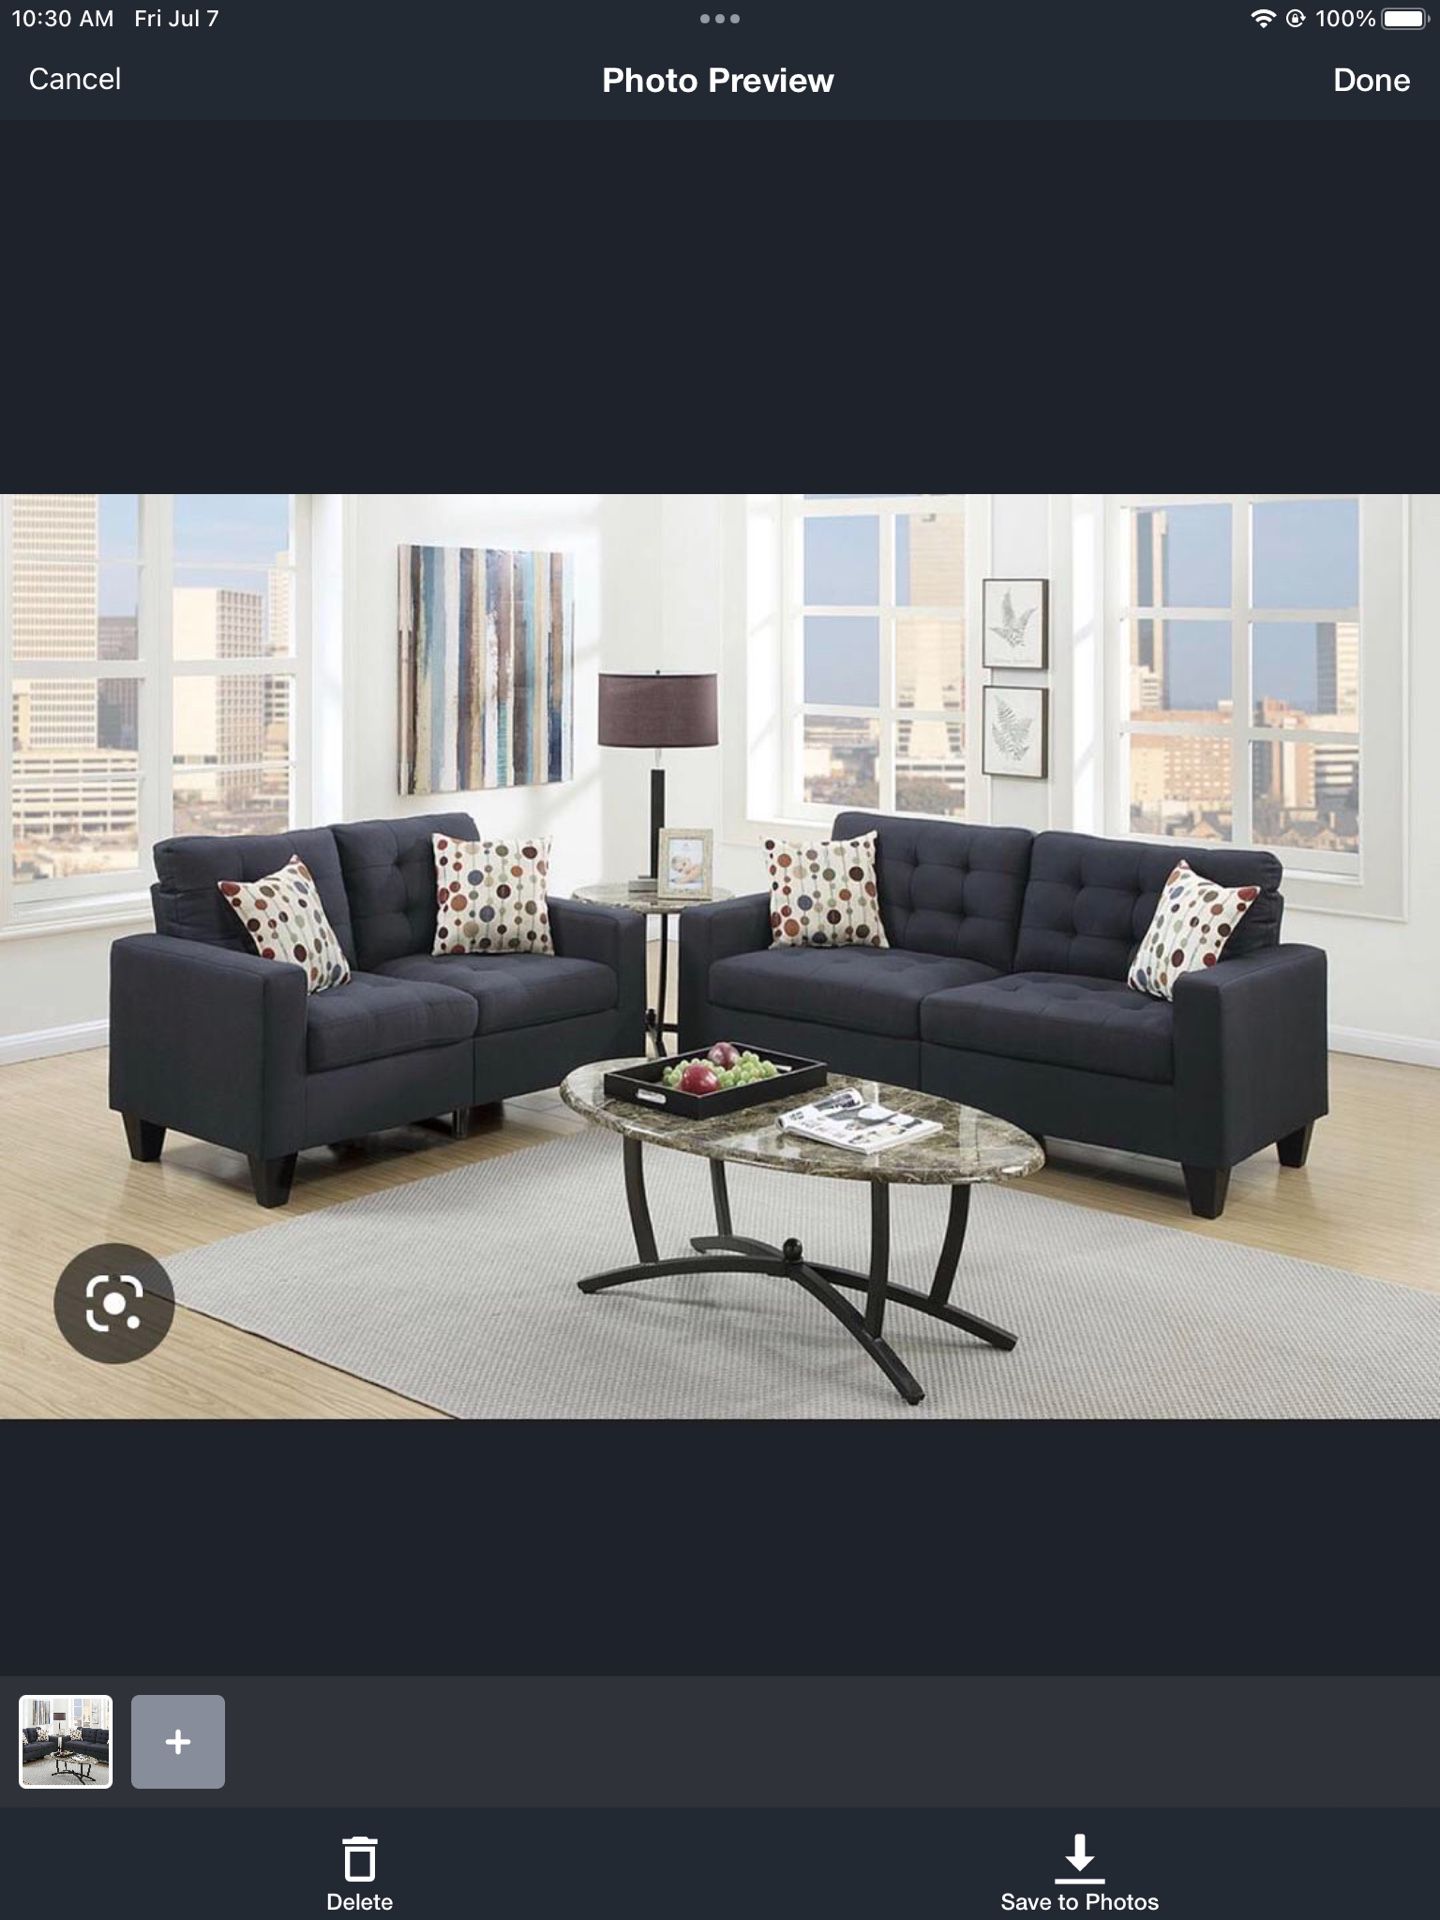 2pcs Sofa Set Clearance Price $499.99